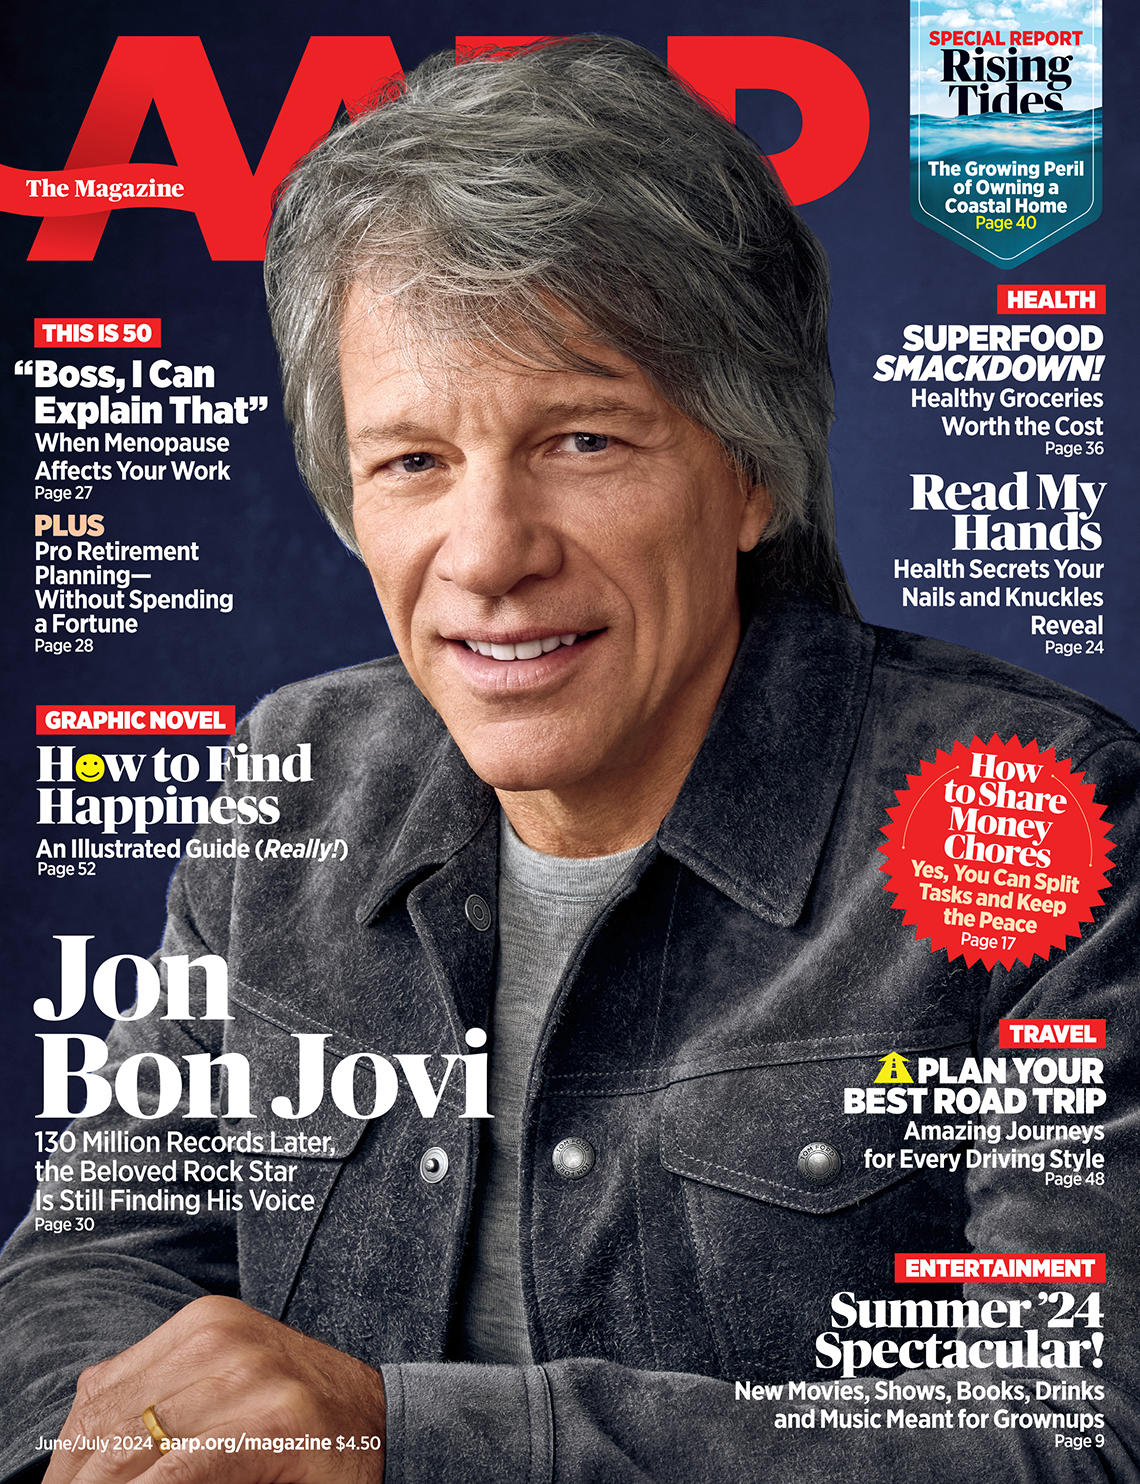 AARP the Magazine cover June-July 2024 featuring Jon Bon Jovi